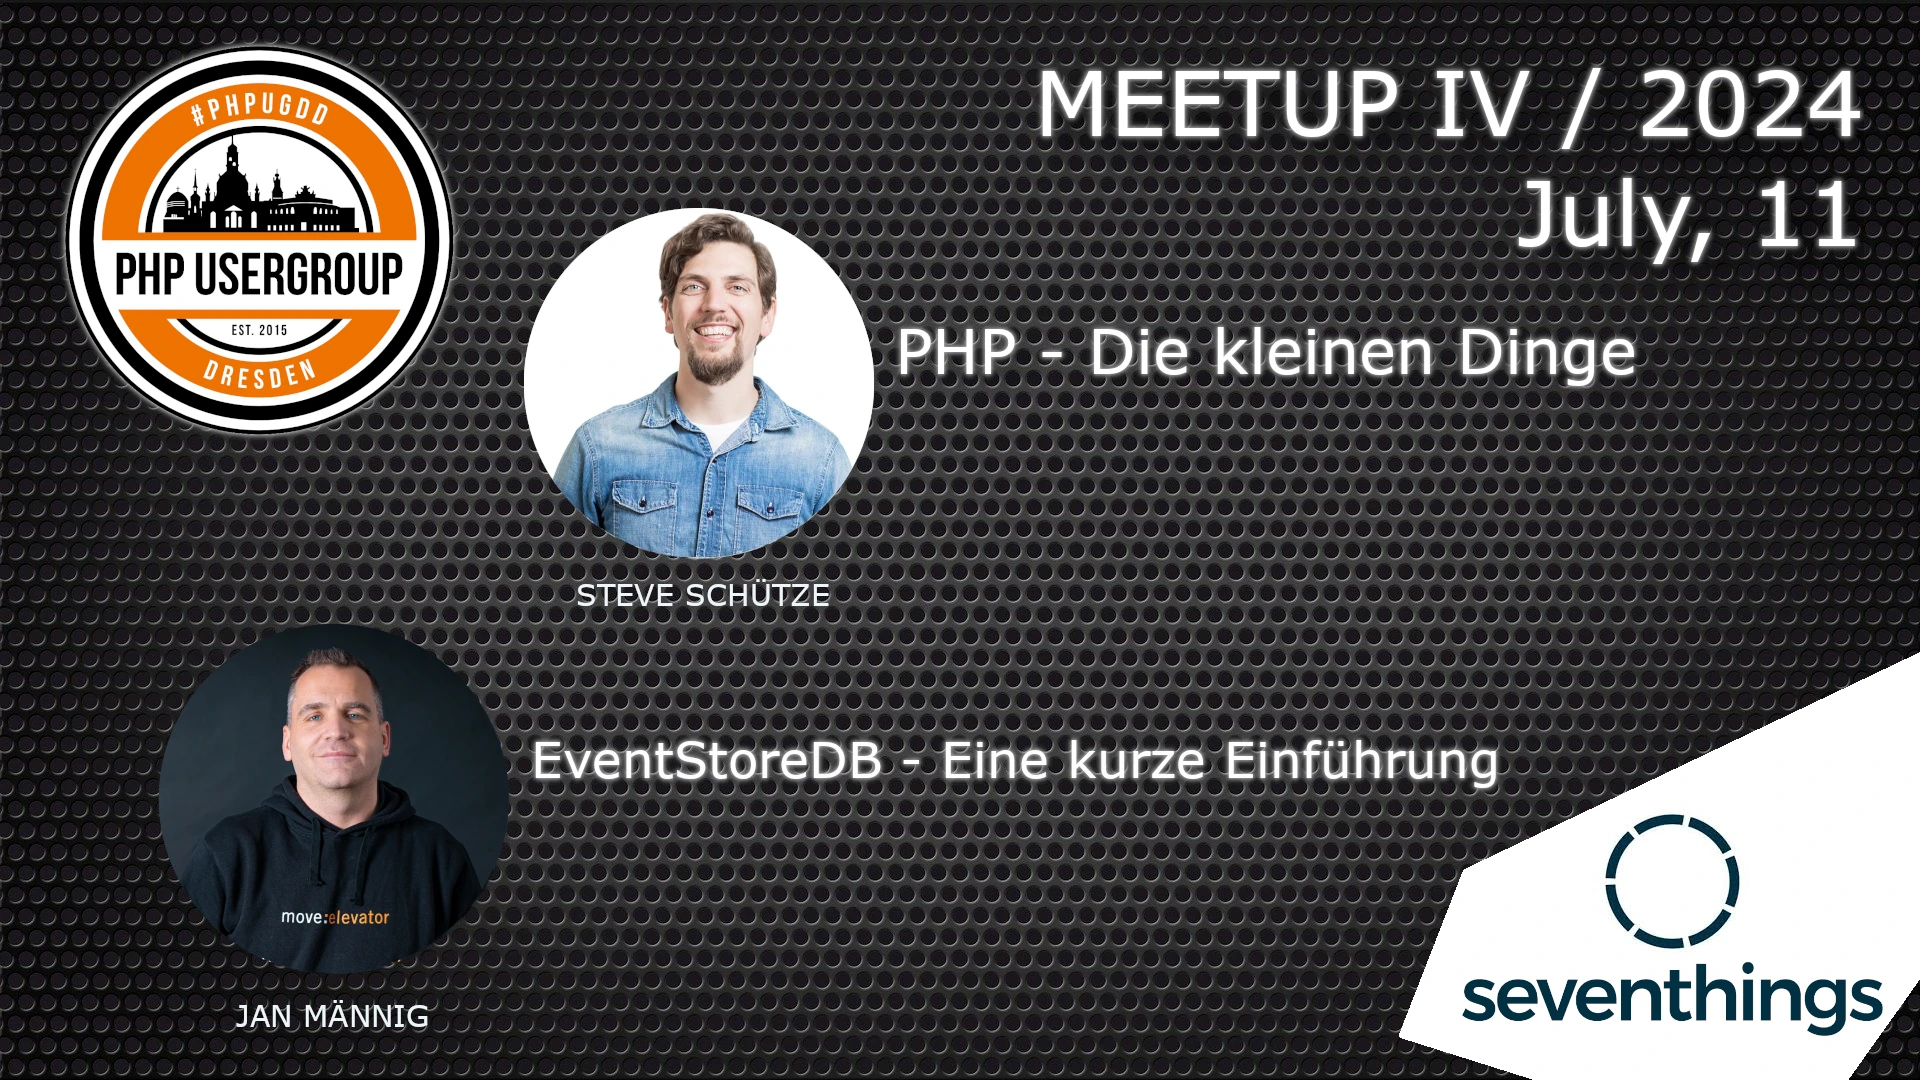 PHPUGDD Meetup IV/2024,July 11, Speakers: Steve Schütze, Topic: PHP - Die kleinen Dinge; Jan Männig, Topic: EventStoreDB